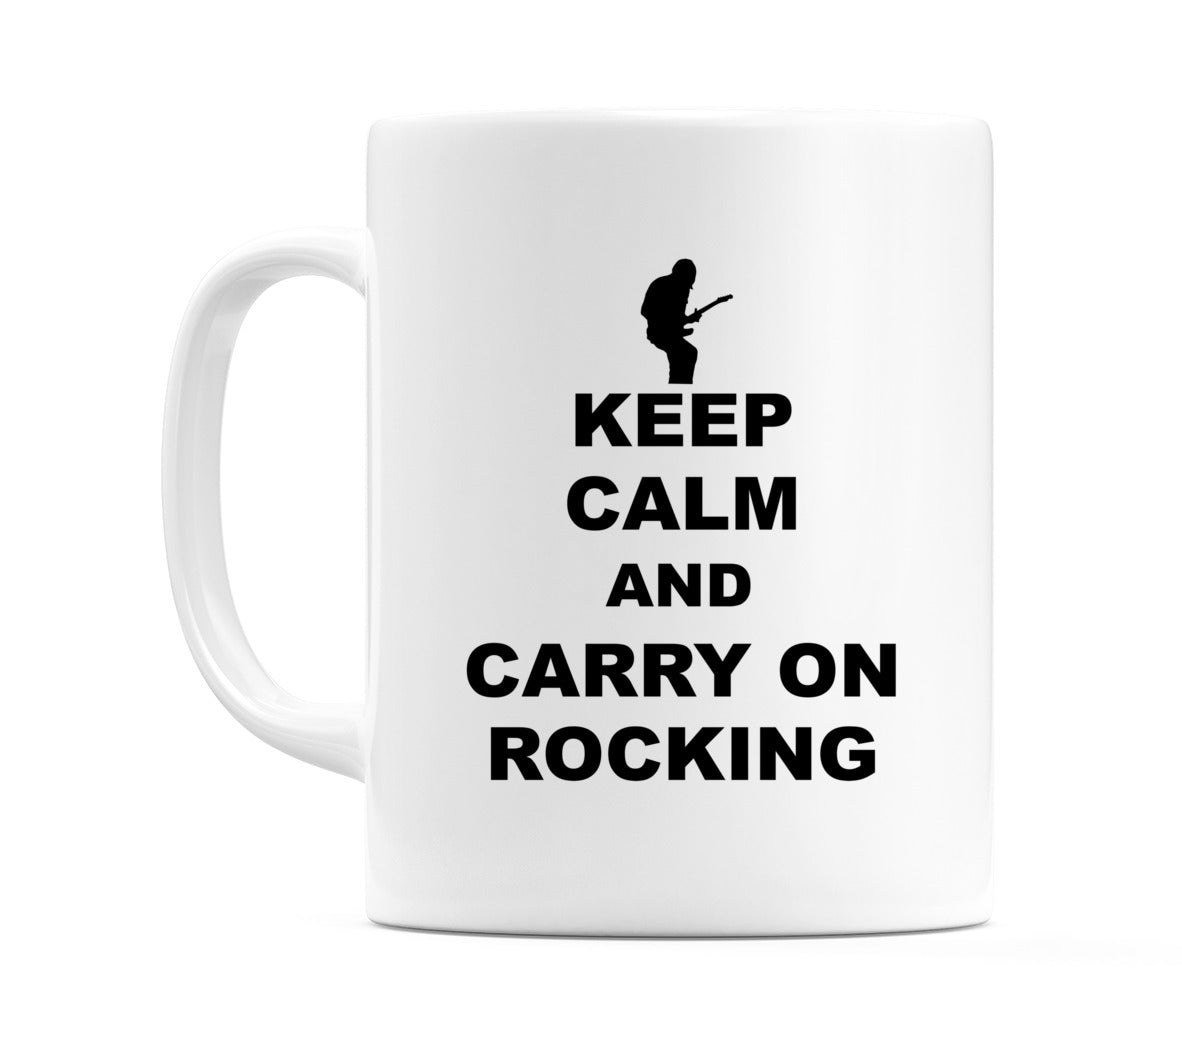 Keep Calm and Carry on Rocking Mug